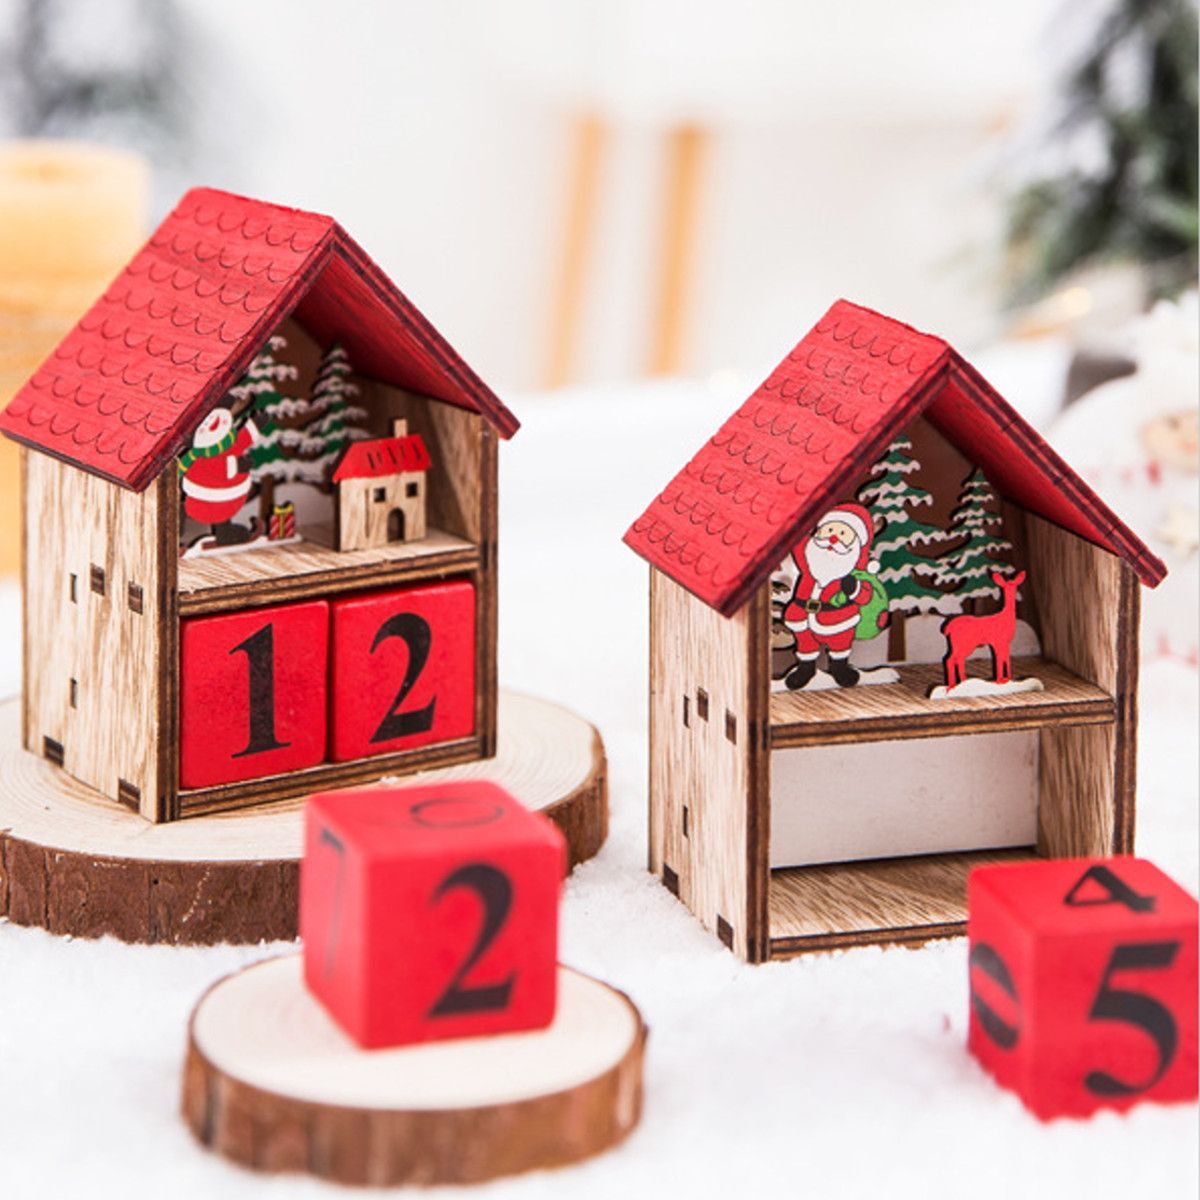 Christmas-Advent-Calendar-LED-Light-Up-Wood-House-Santa-Claus-Snowman-Home-Decoration-1761640